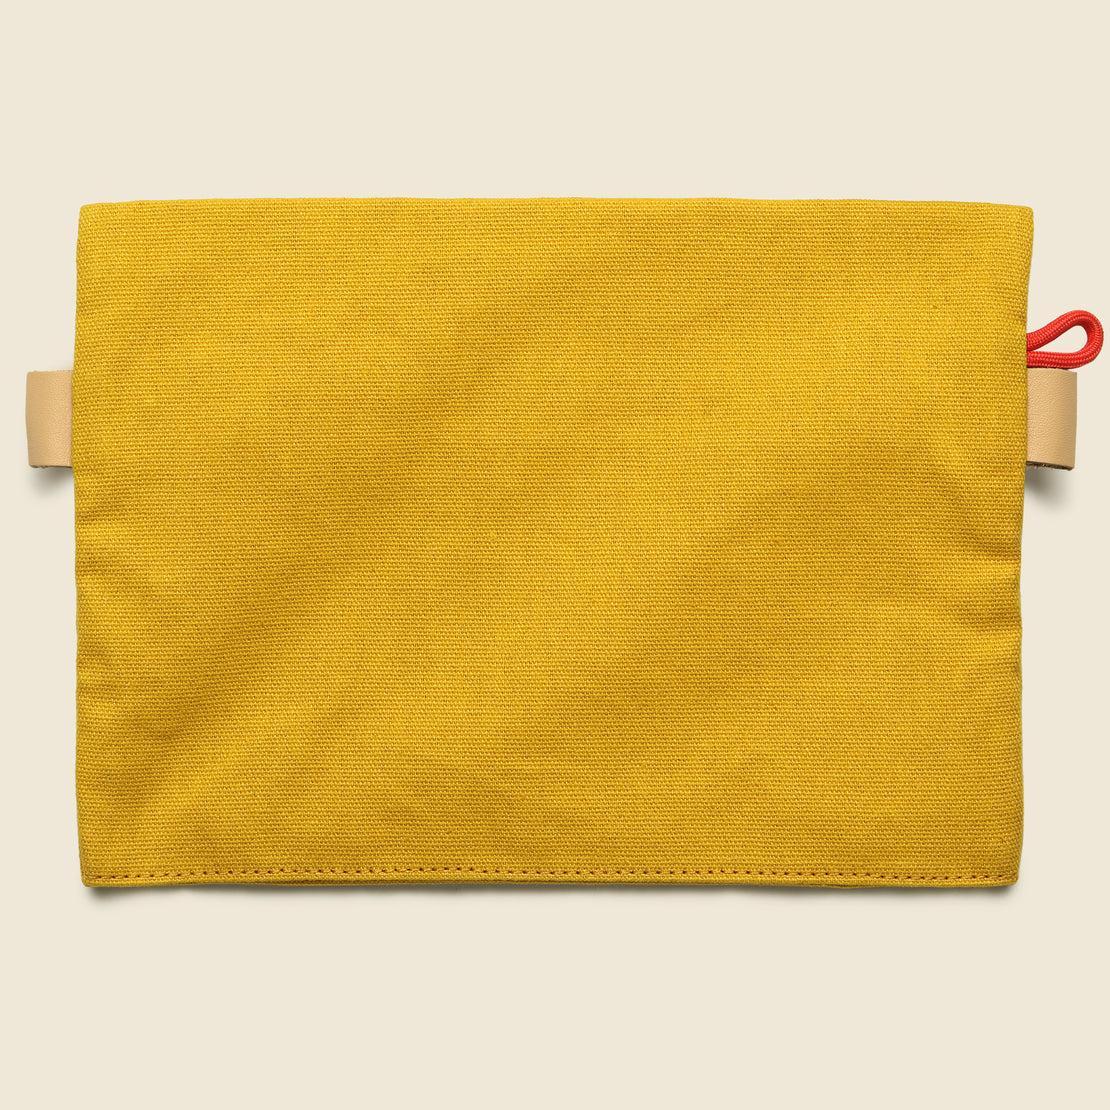 Medium Accessory Bag - Mustard Canvas - Topo Designs - STAG Provisions - Accessories - Bags / Luggage